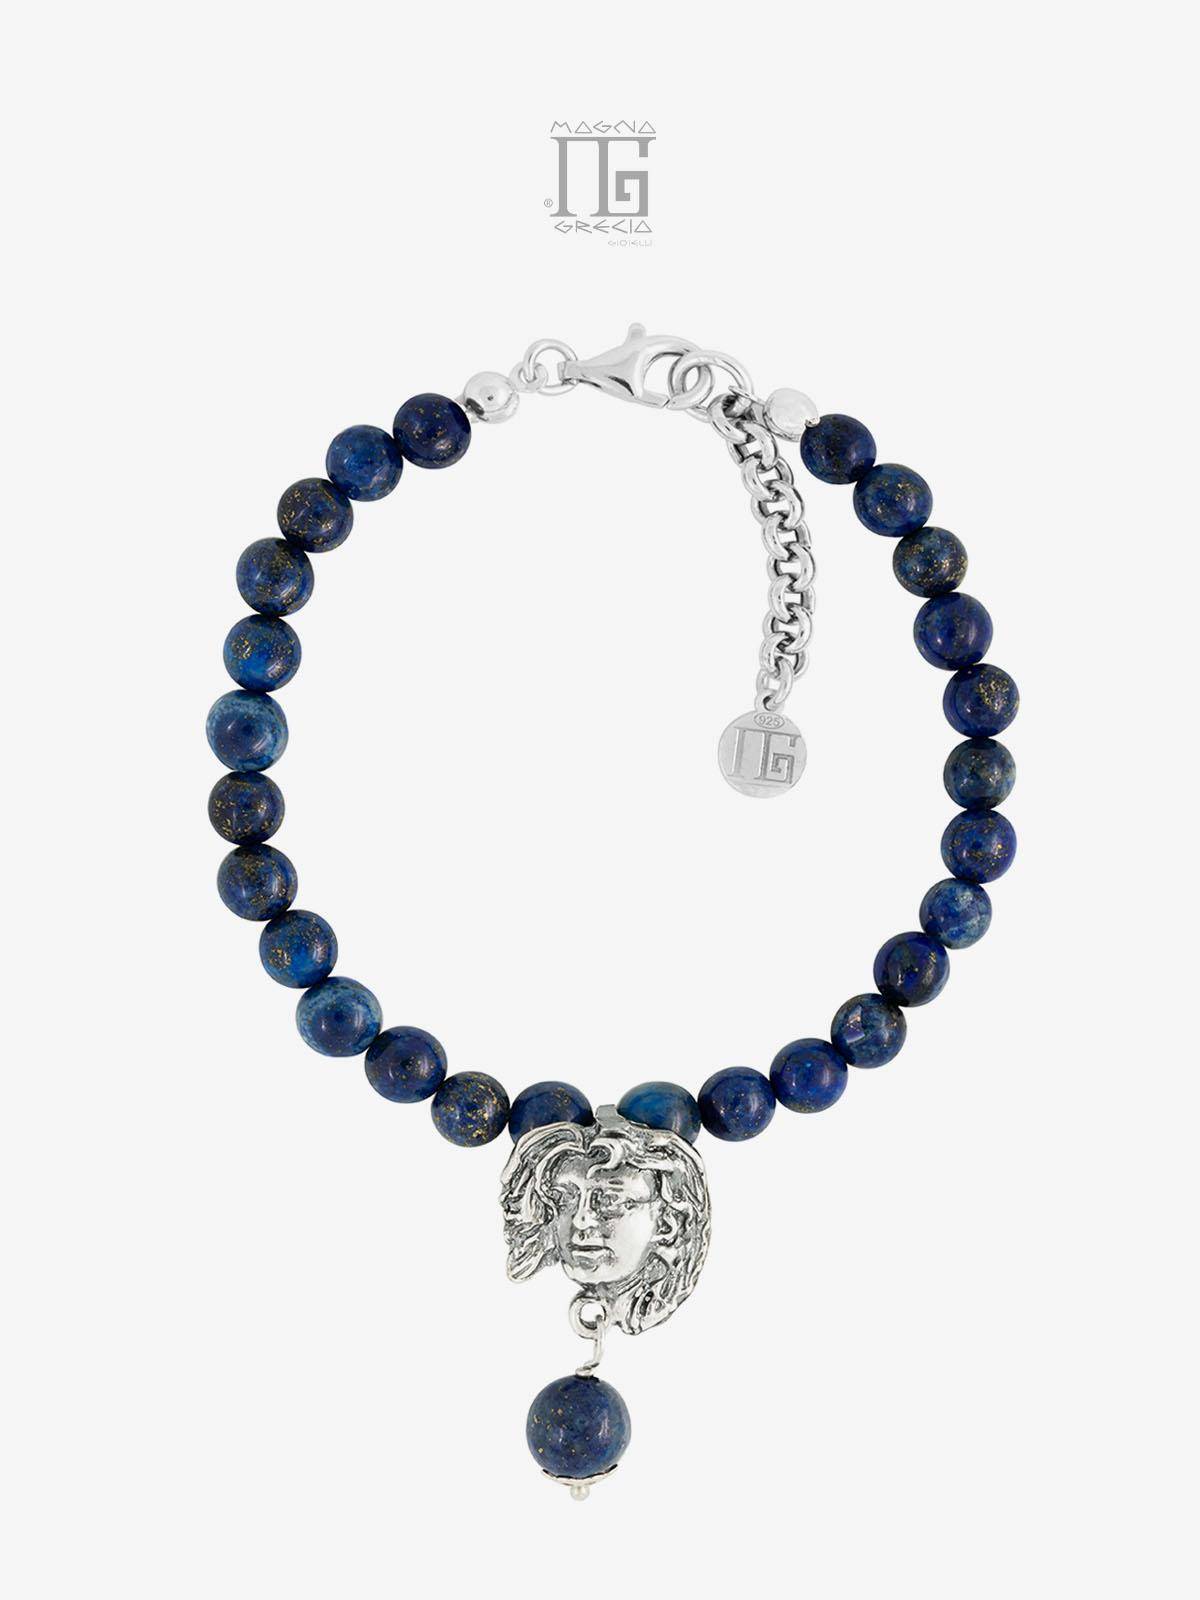 "Tranquility" Bracelet in Blue Lapis Lazuli with Venus Face Cod. MGK 3851 V-4